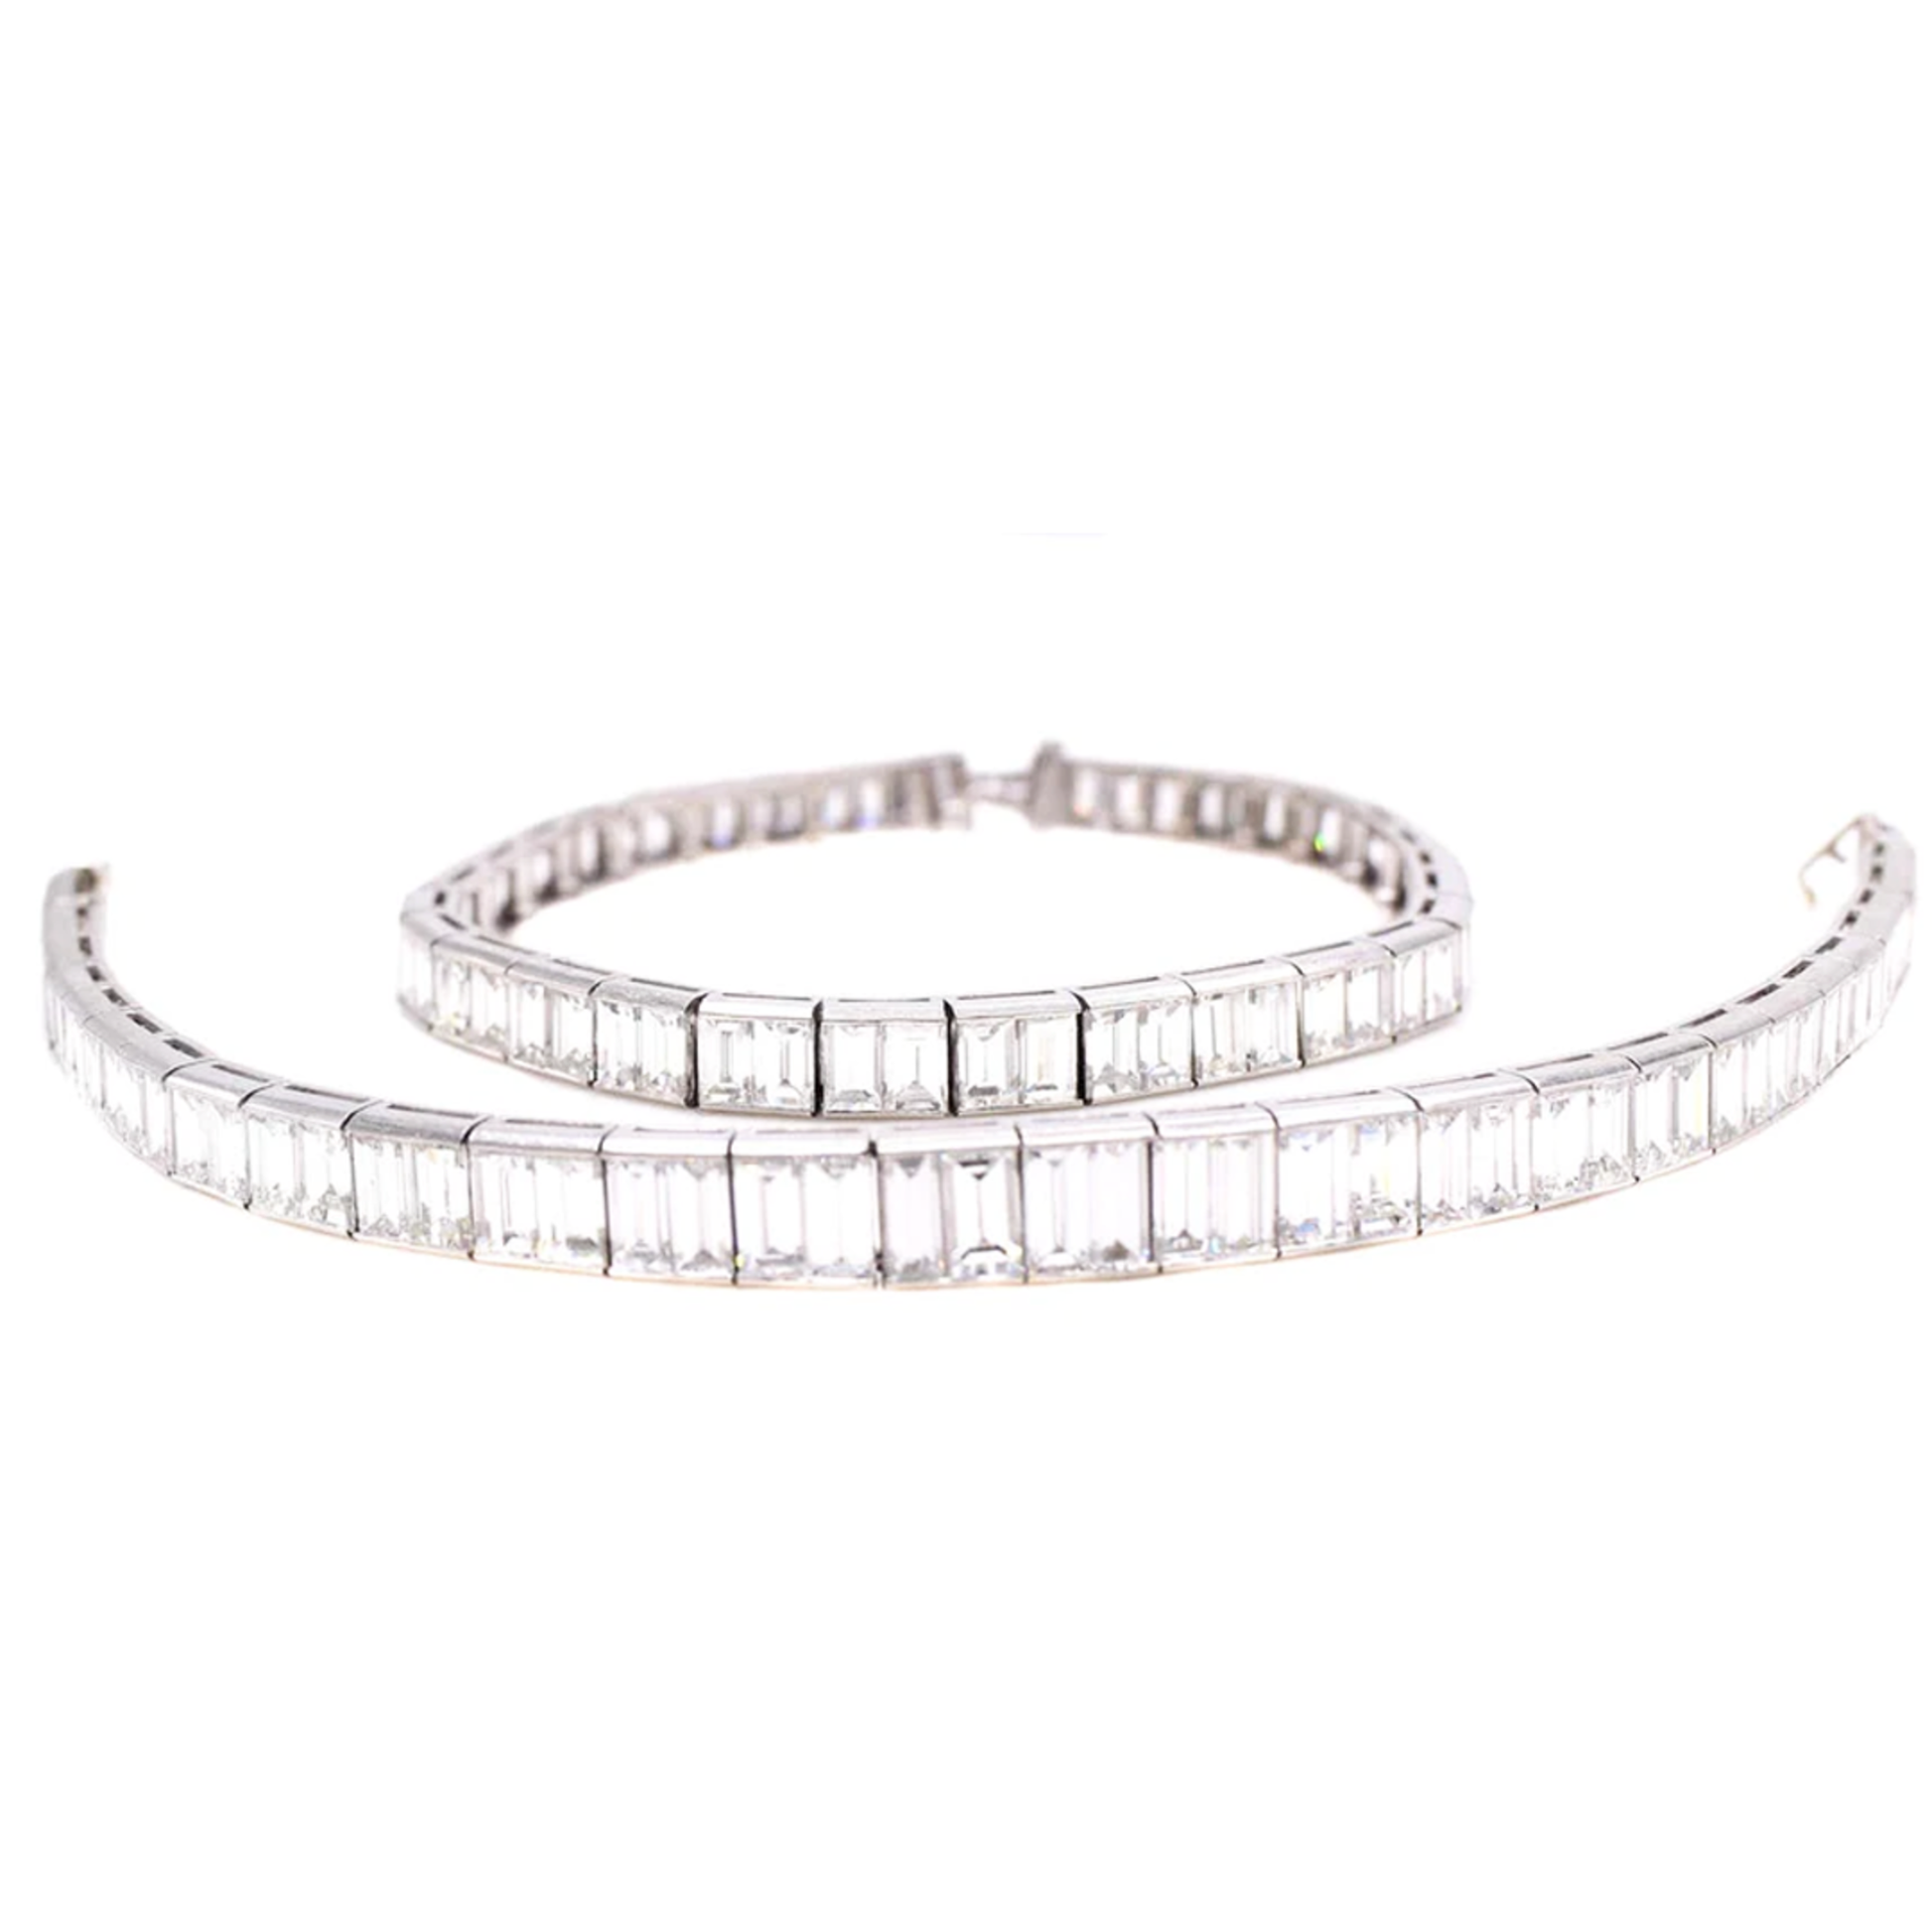 1950s Platinum Diamond Necklace/Bracelet front as bracelets